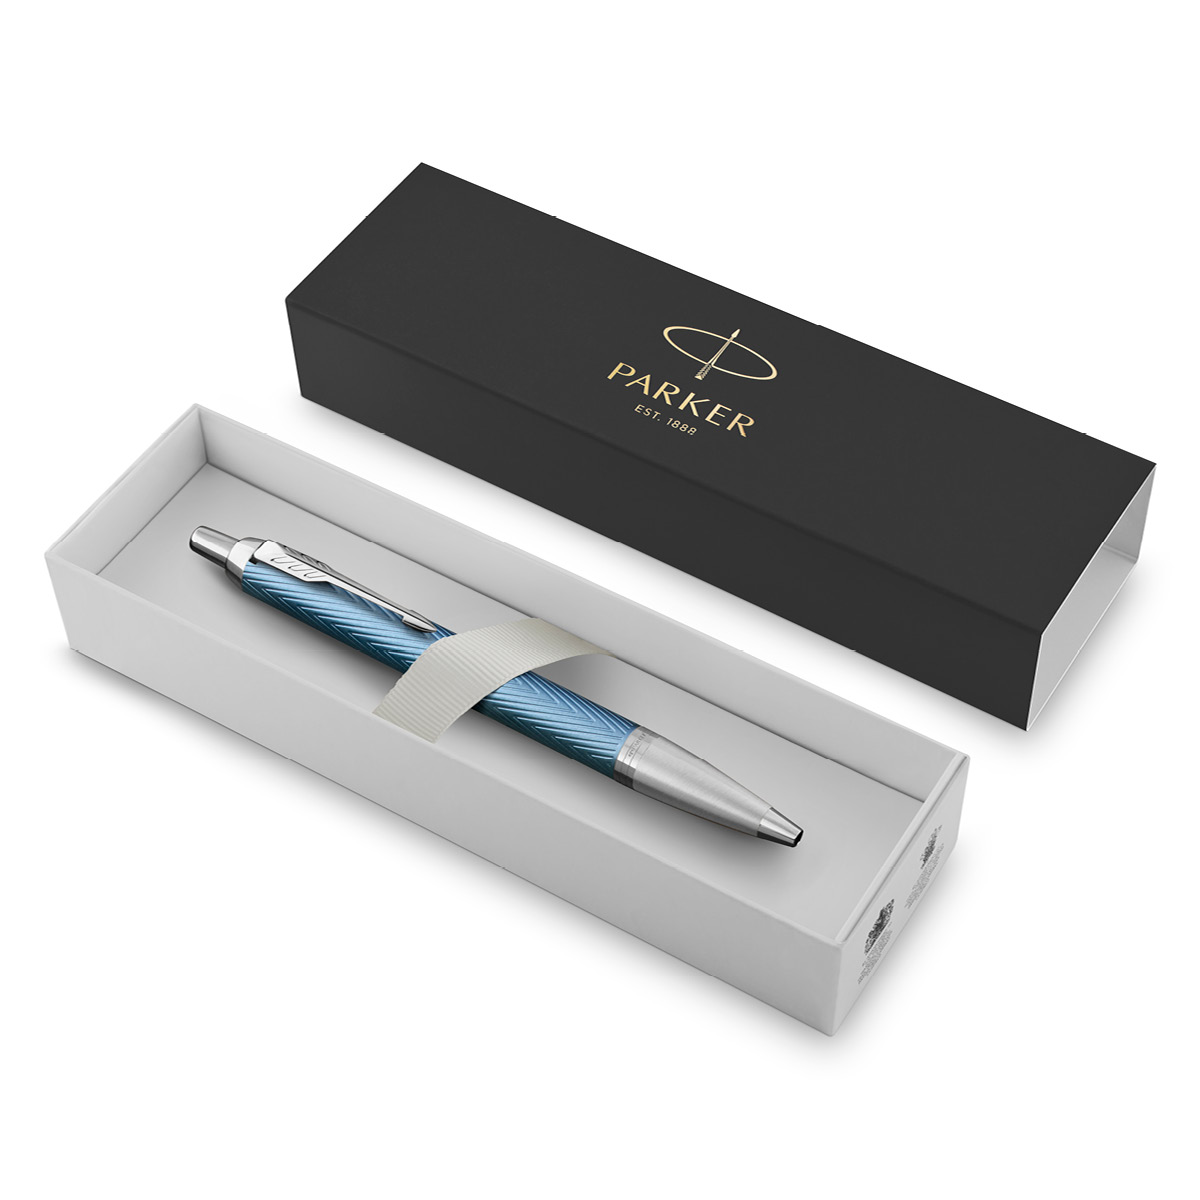 IM Premium Blue/Grey Ballpoint pen in the group Pens / Fine Writing / Ballpoint Pens at Pen Store (112694)